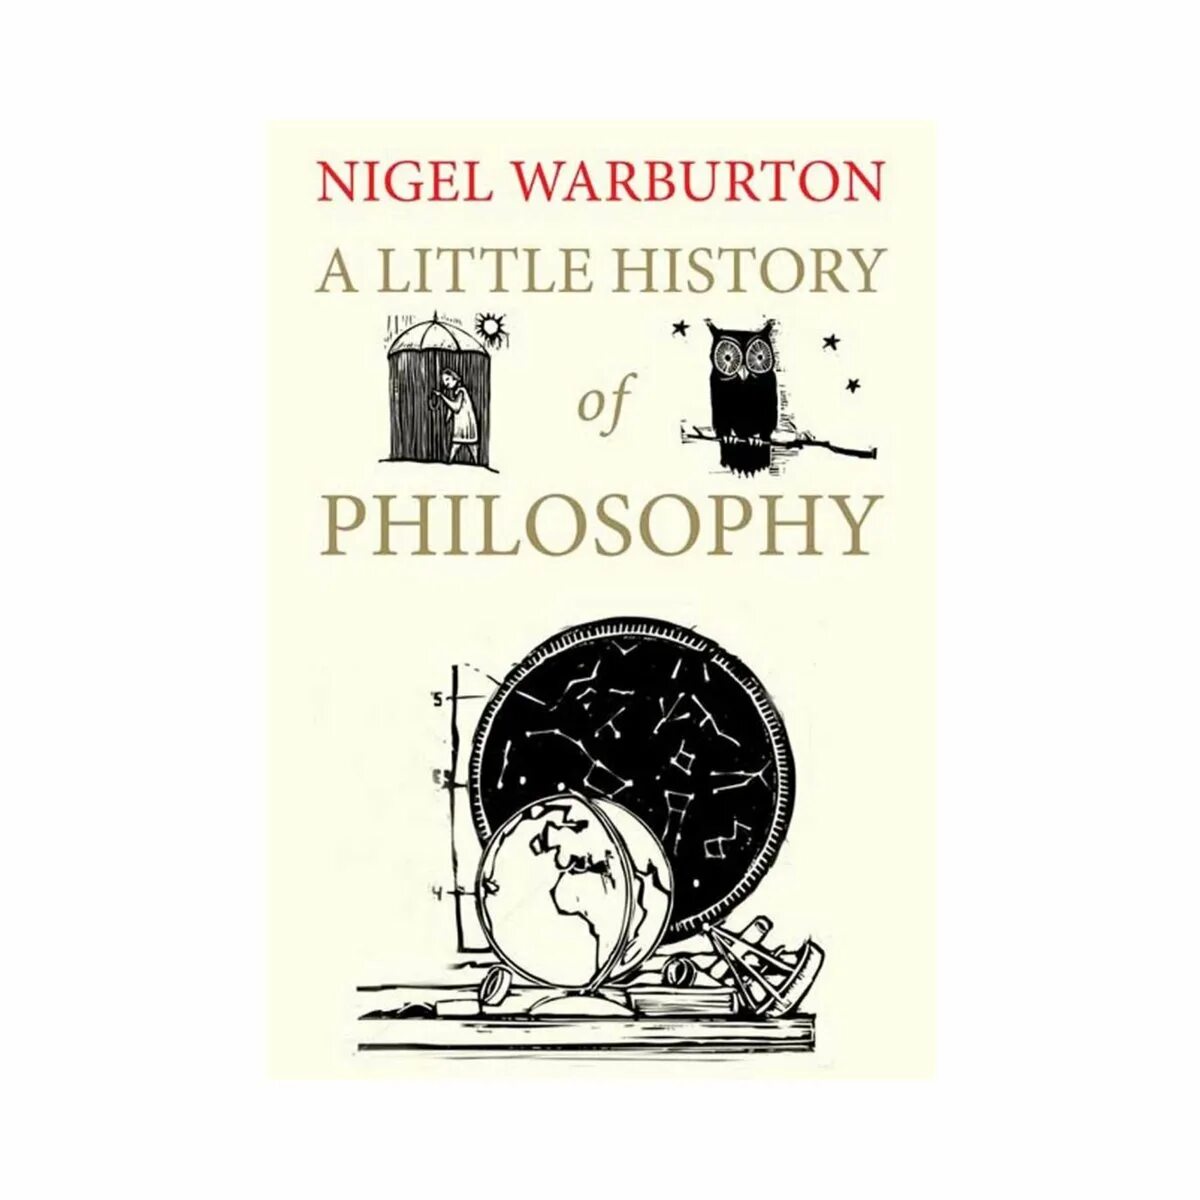 Nigel Warburton a little History of Philosophy. The Philosophy book. Little History of Philosophy. Философия чтения книг. Little history